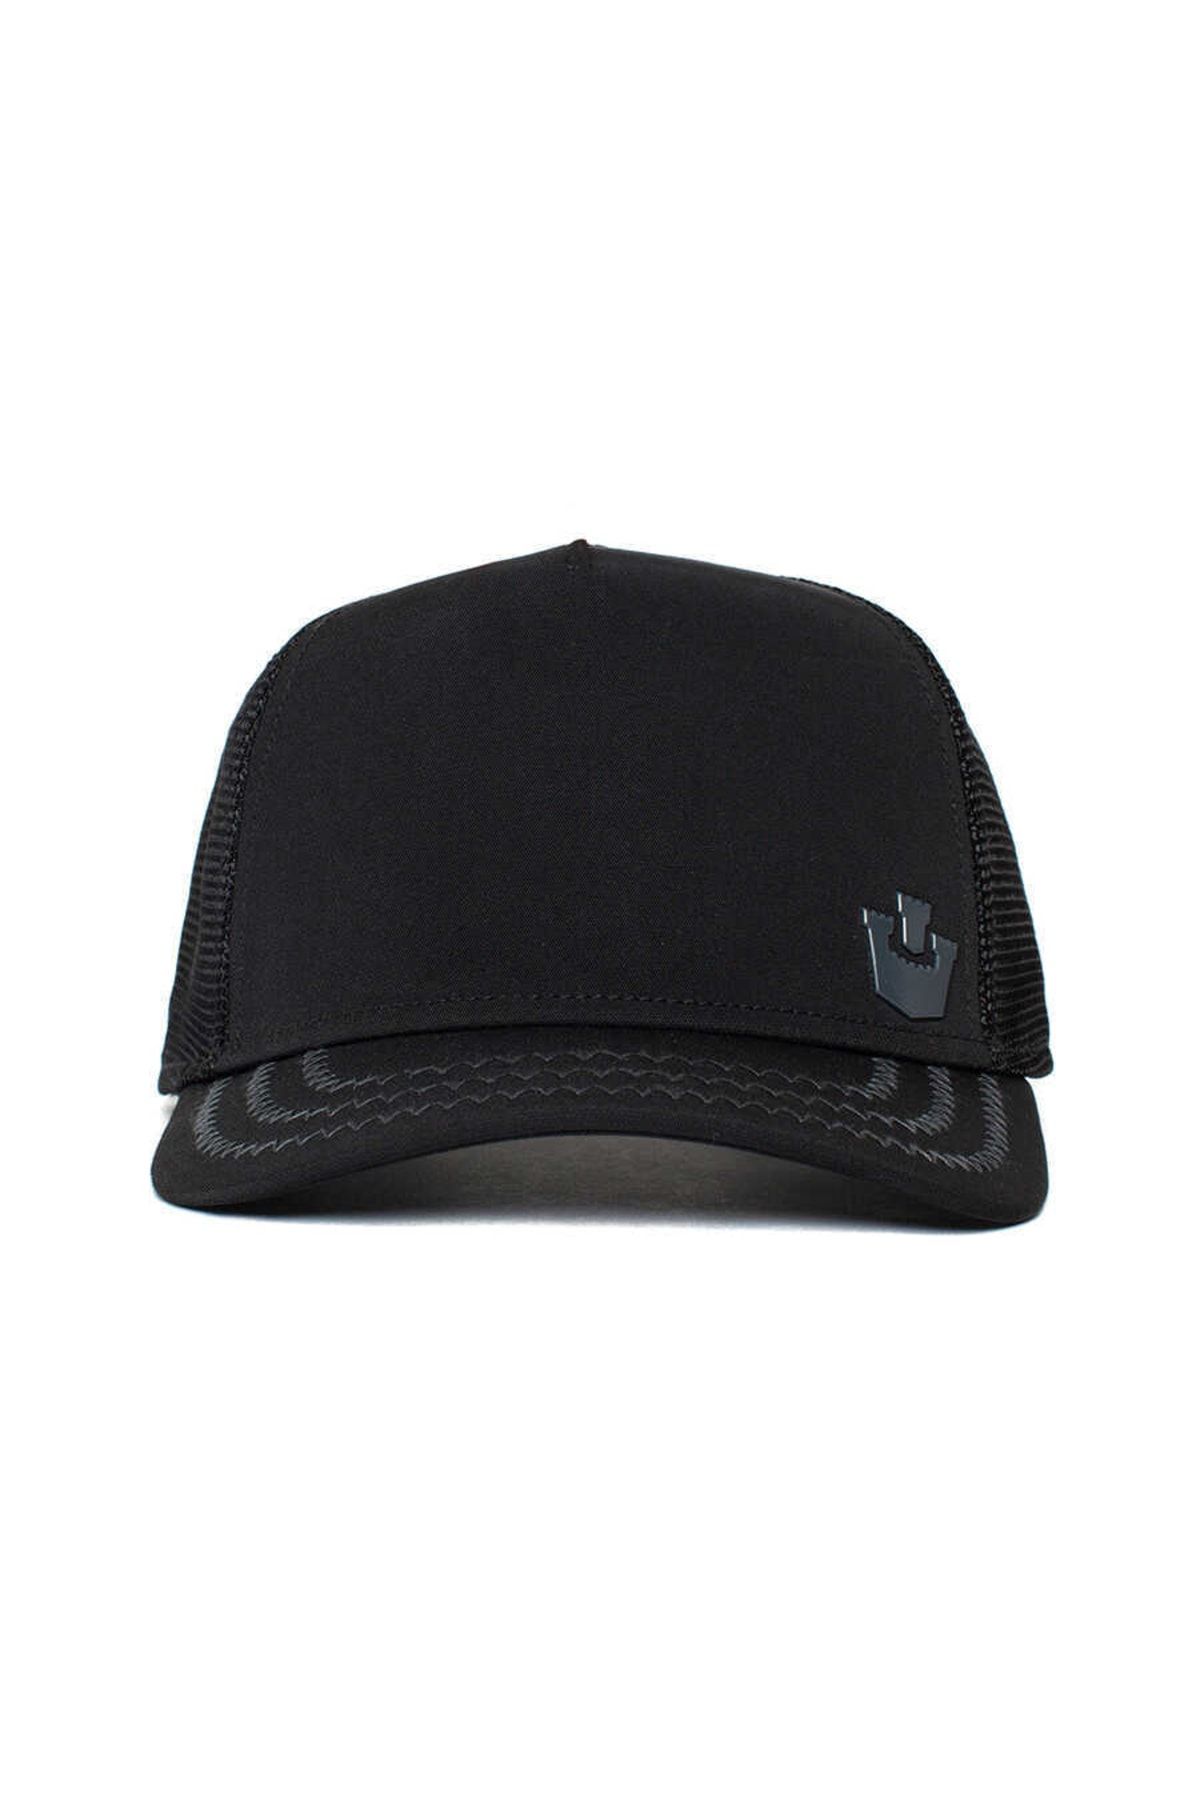 Goorin Bros Gateway Şapka 101-0784 Siyah Standart